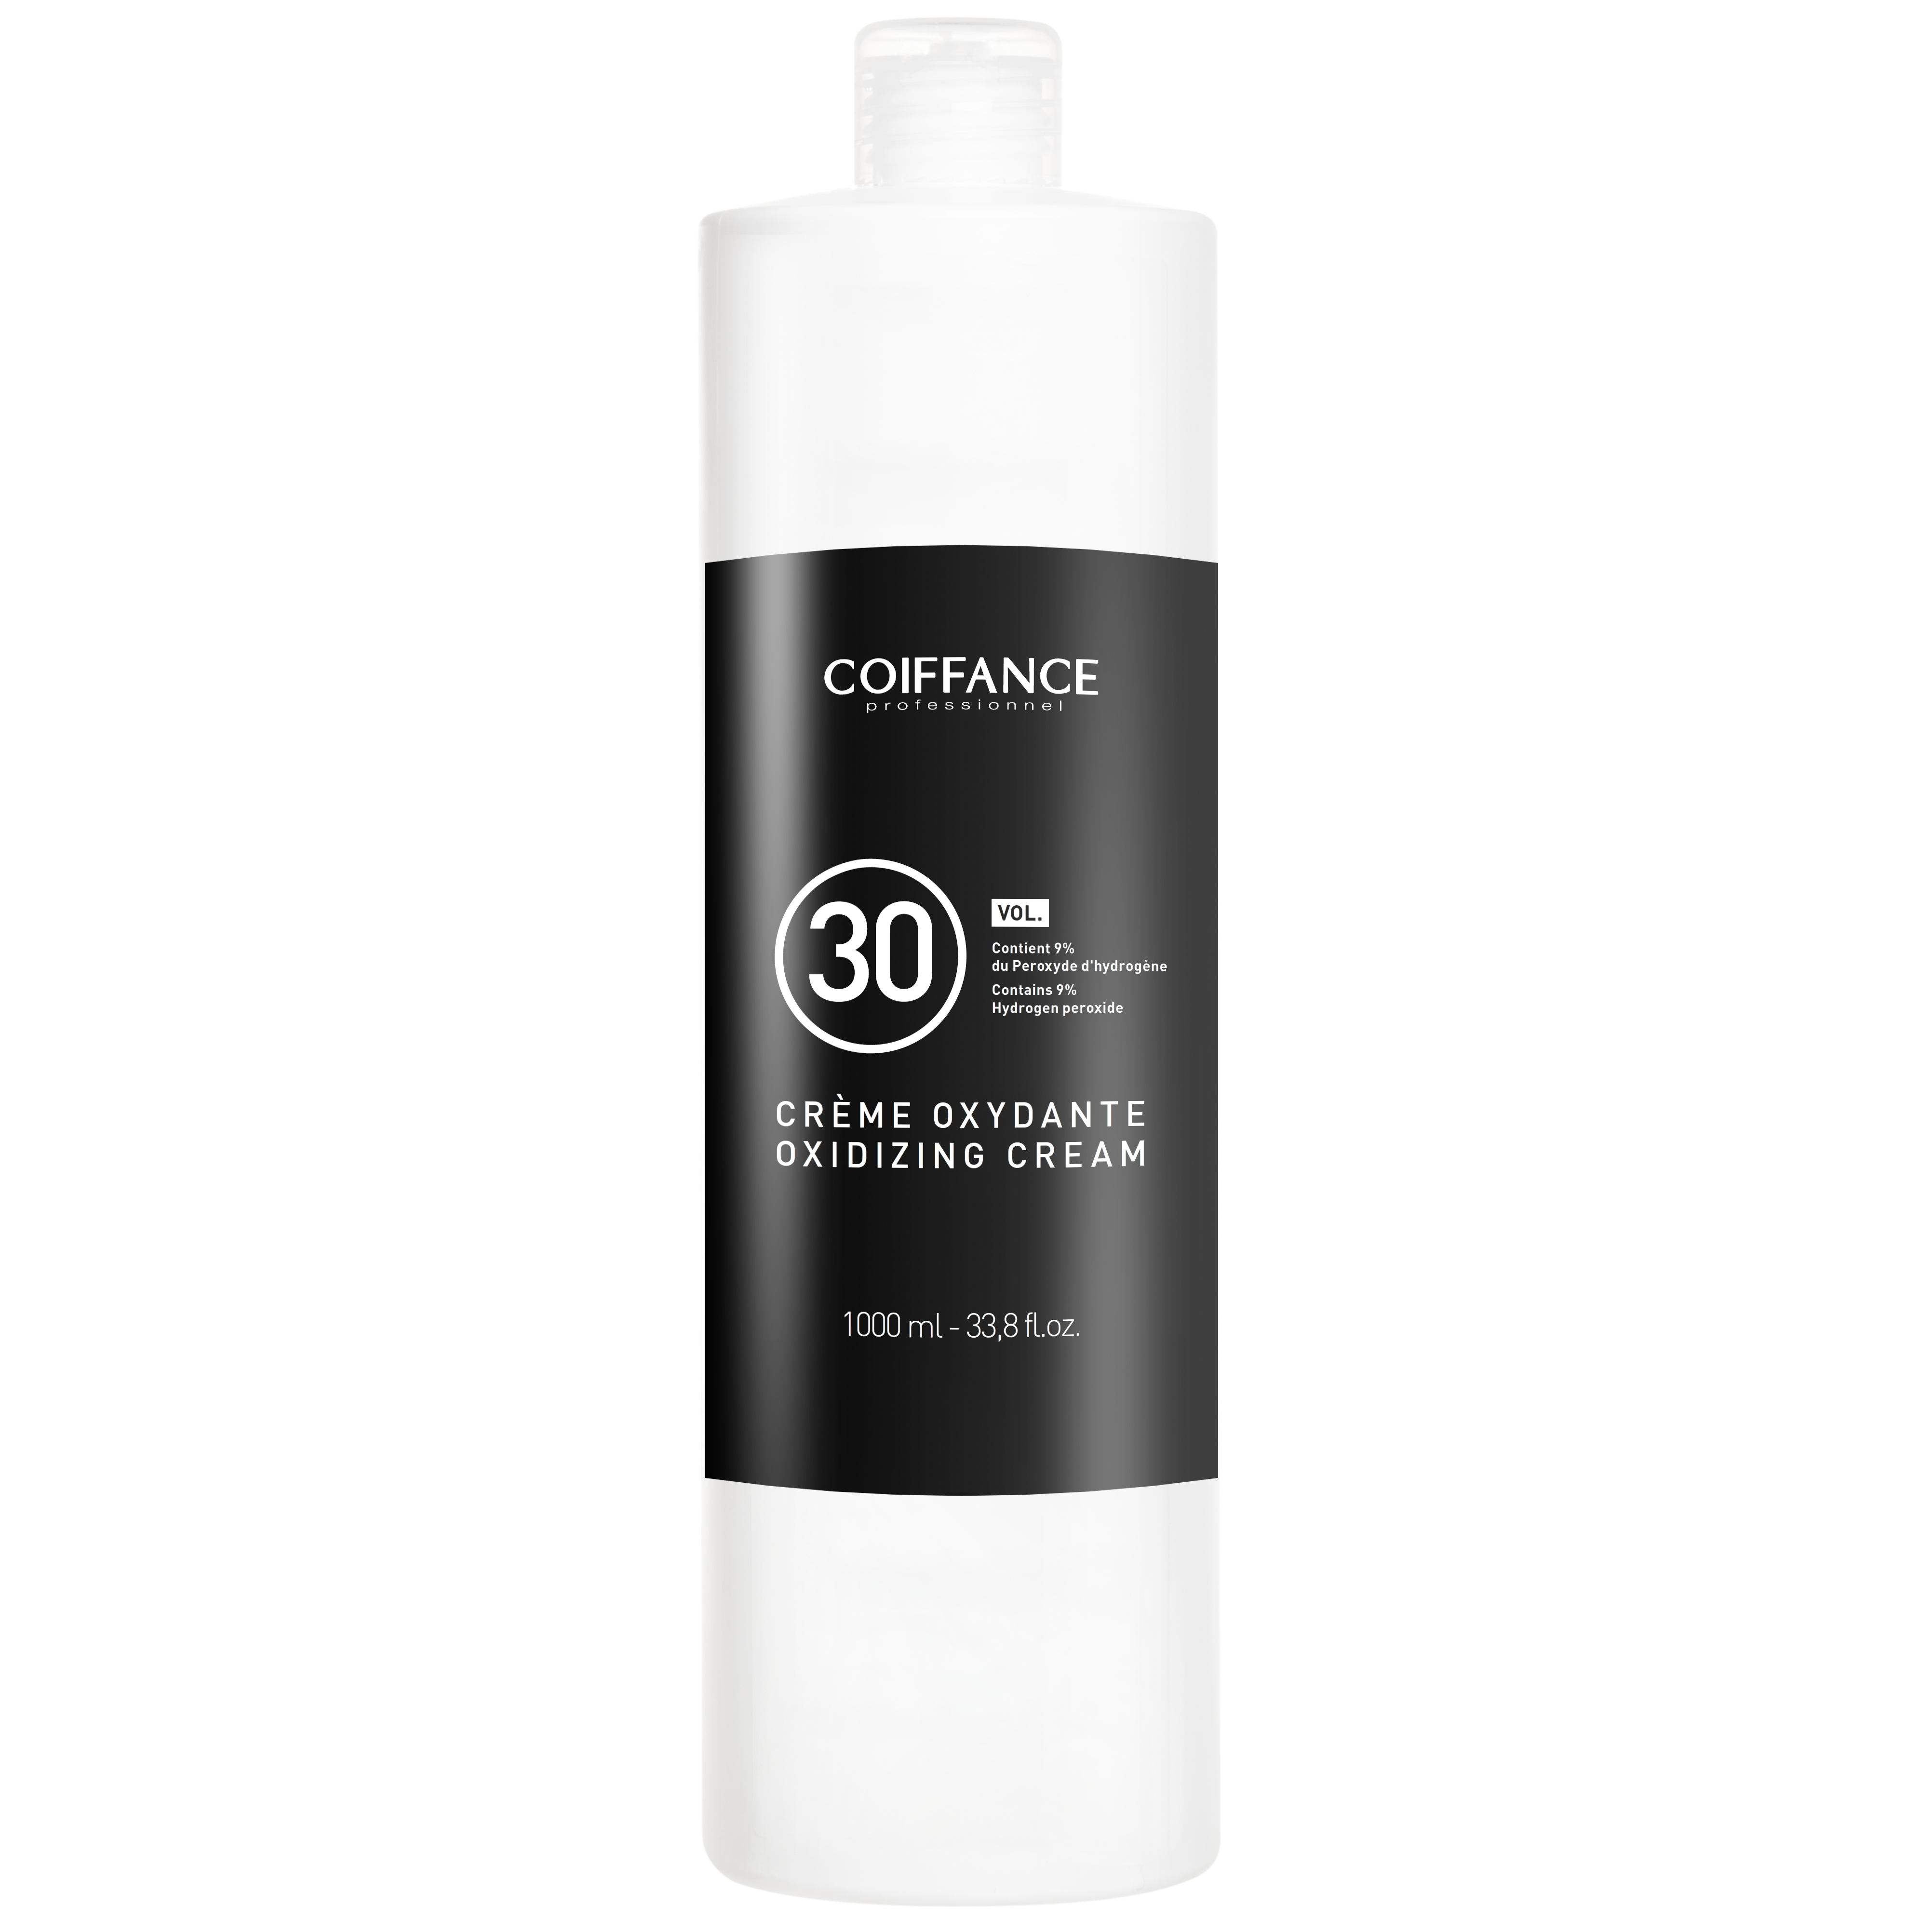 COIFFANCE, Крем-оксидант VOL30 (9%)Color Oxidising Cream, 1000 мл.